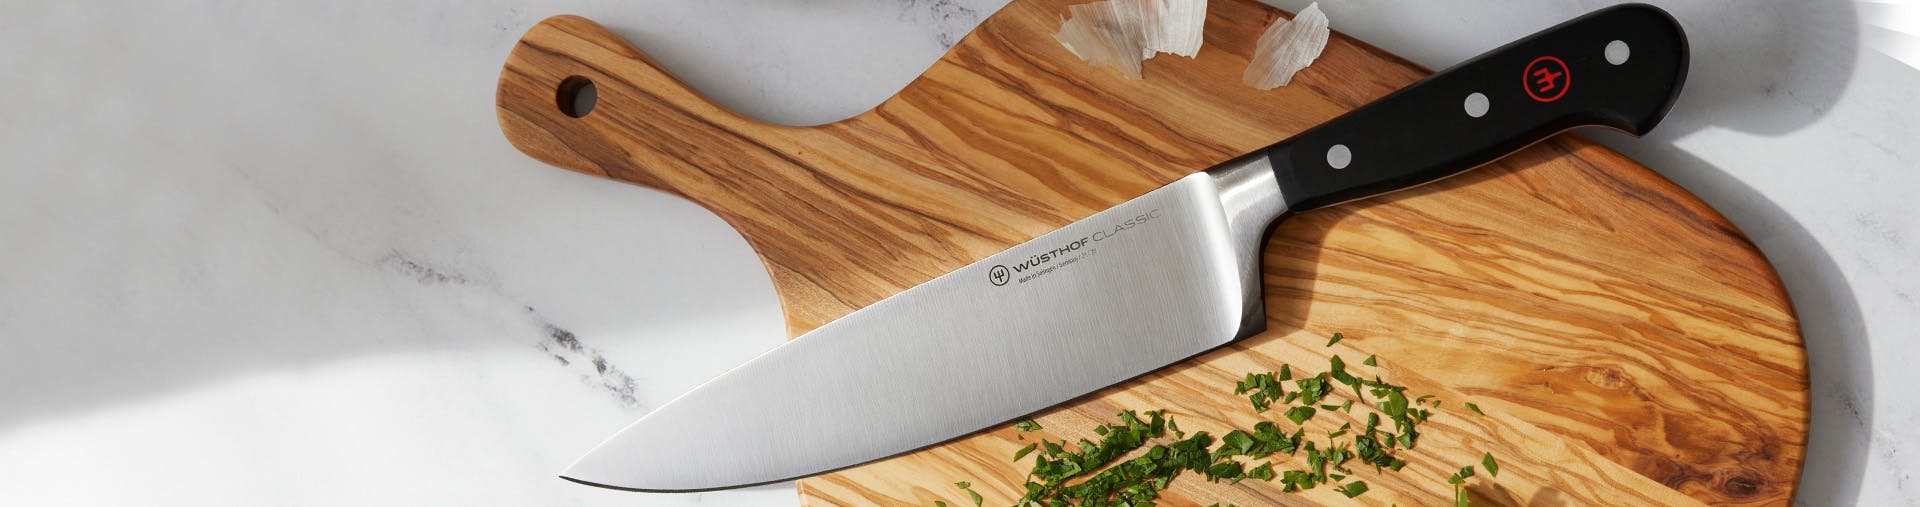 knive on cutting board